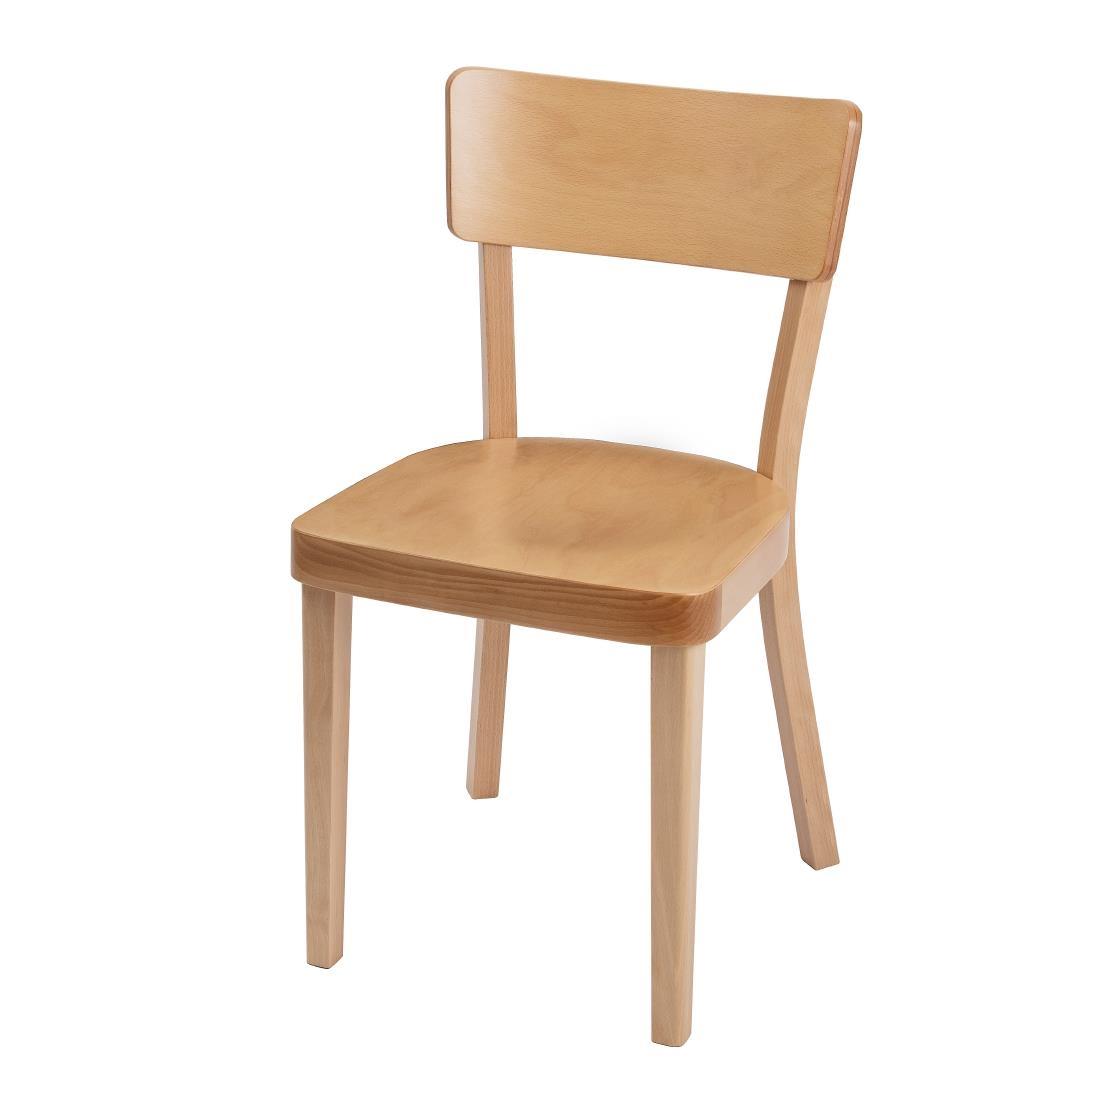 Fameg Plain Side Chairs Natural Beech (Pack of 2) - DC356  - 3